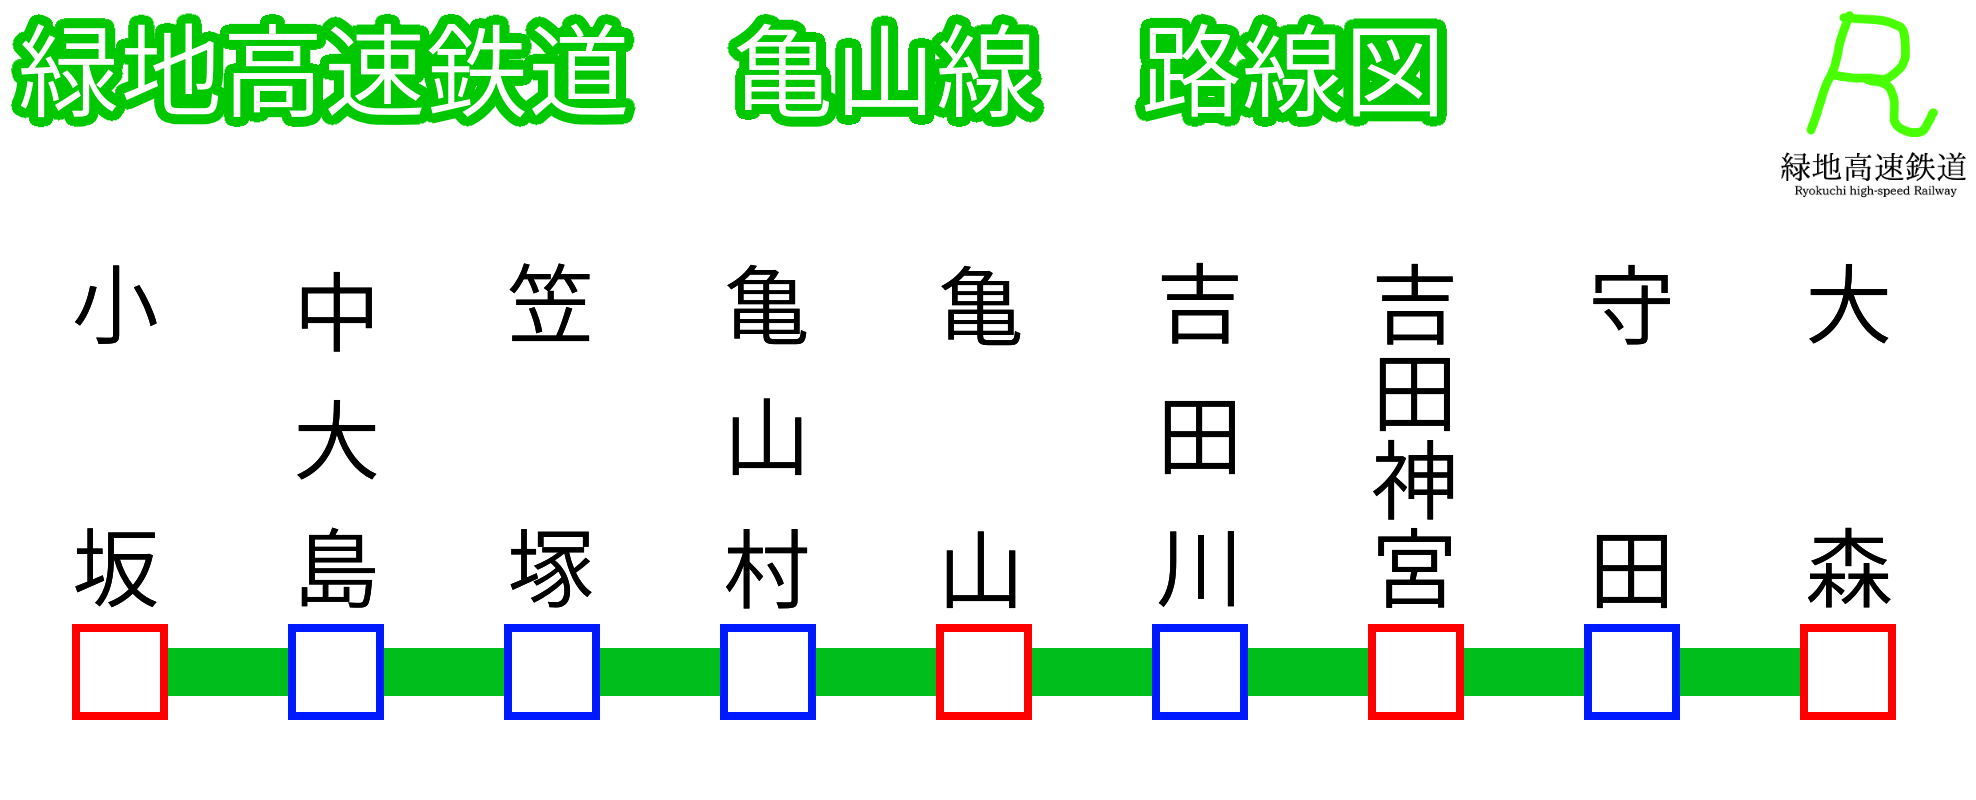 Ryokutetsu Route map.png